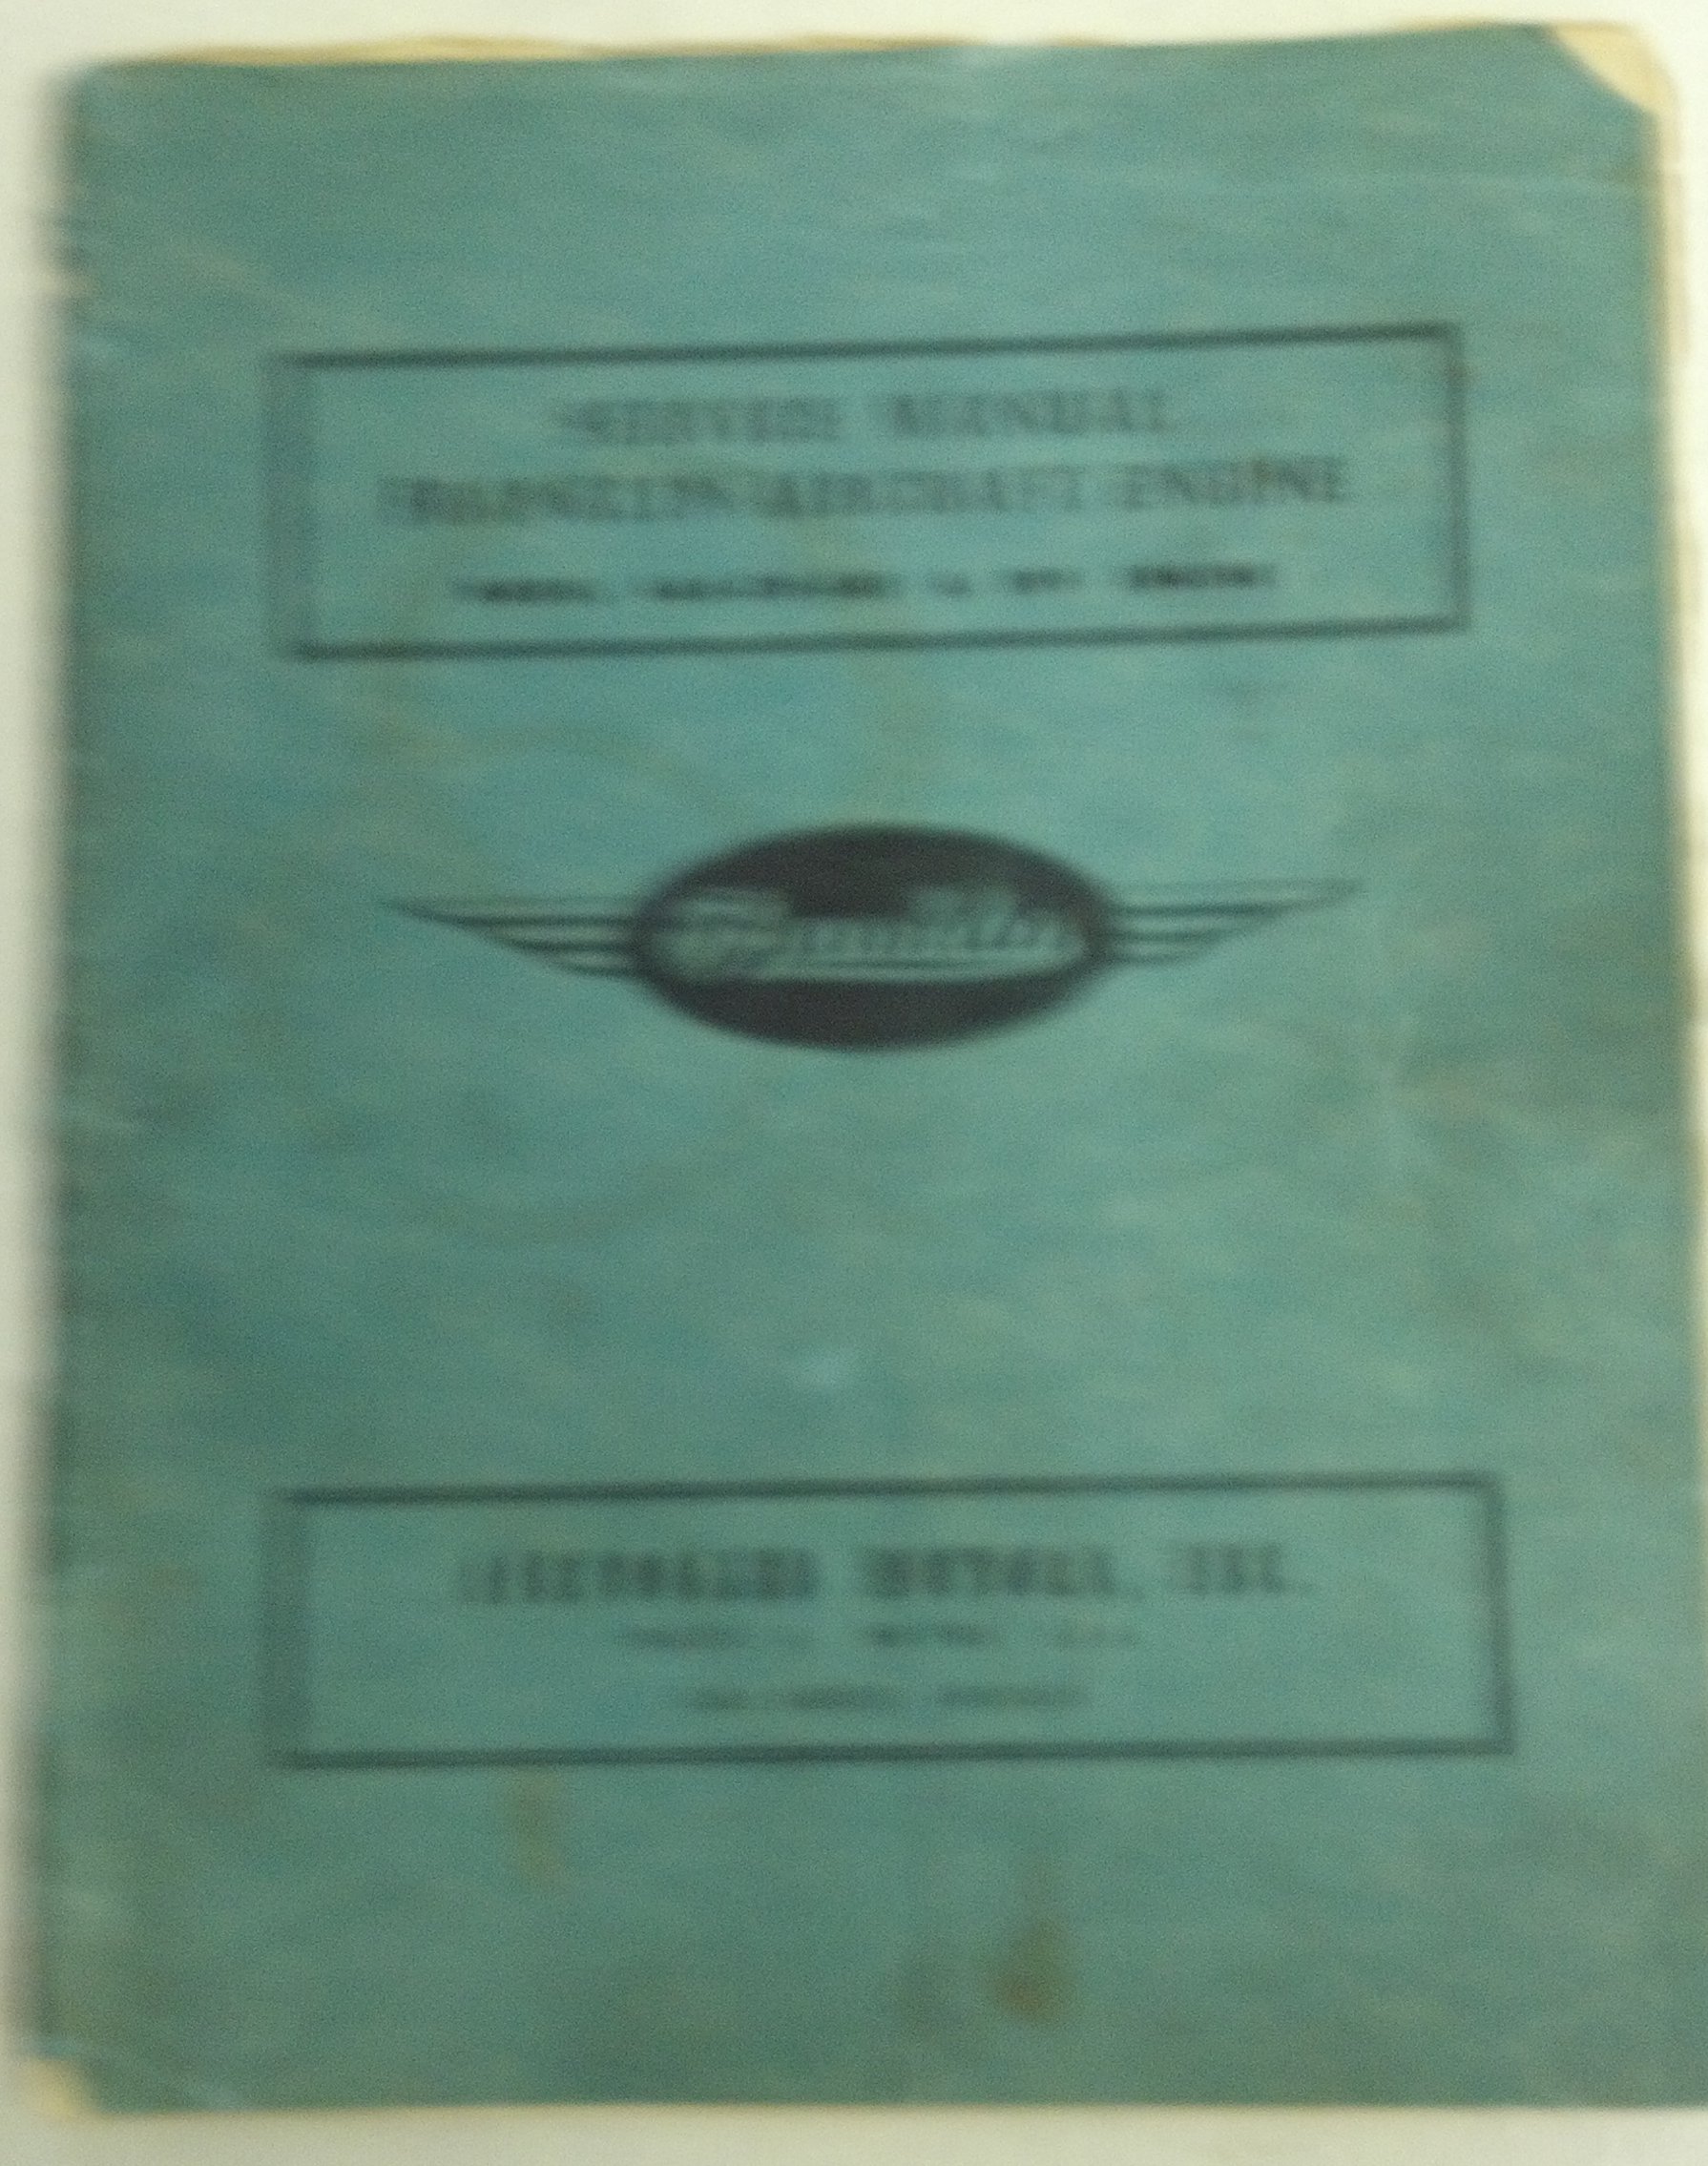 Franklin Manual